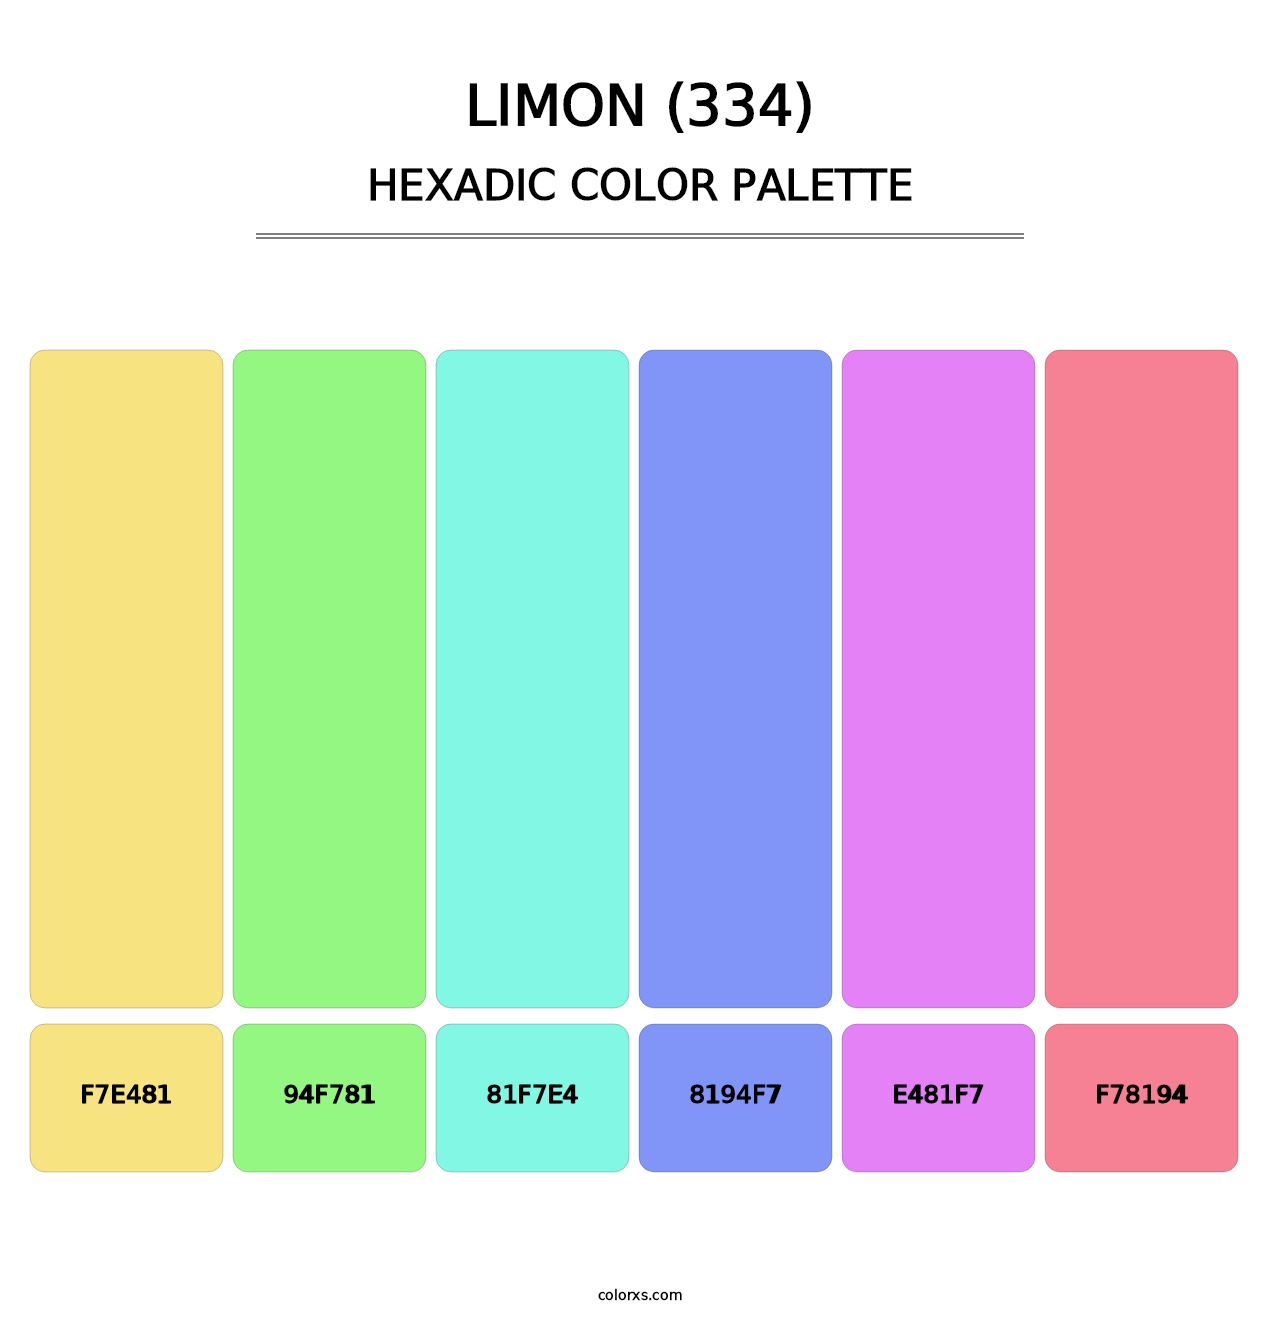 Limon (334) - Hexadic Color Palette